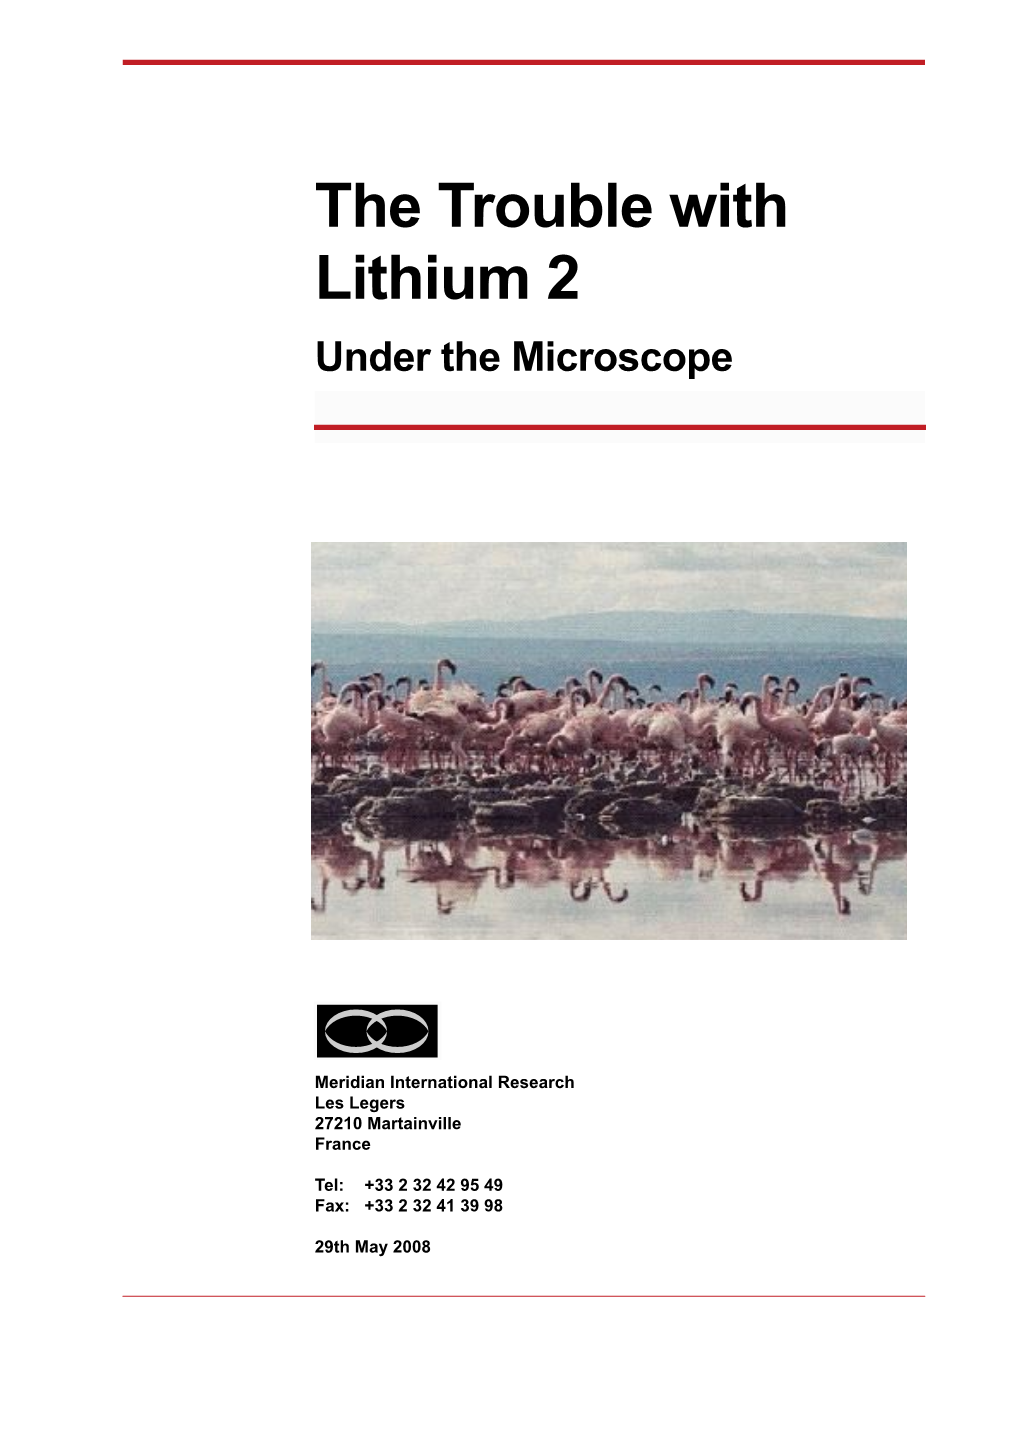 Lithium 2 Under the Microscope